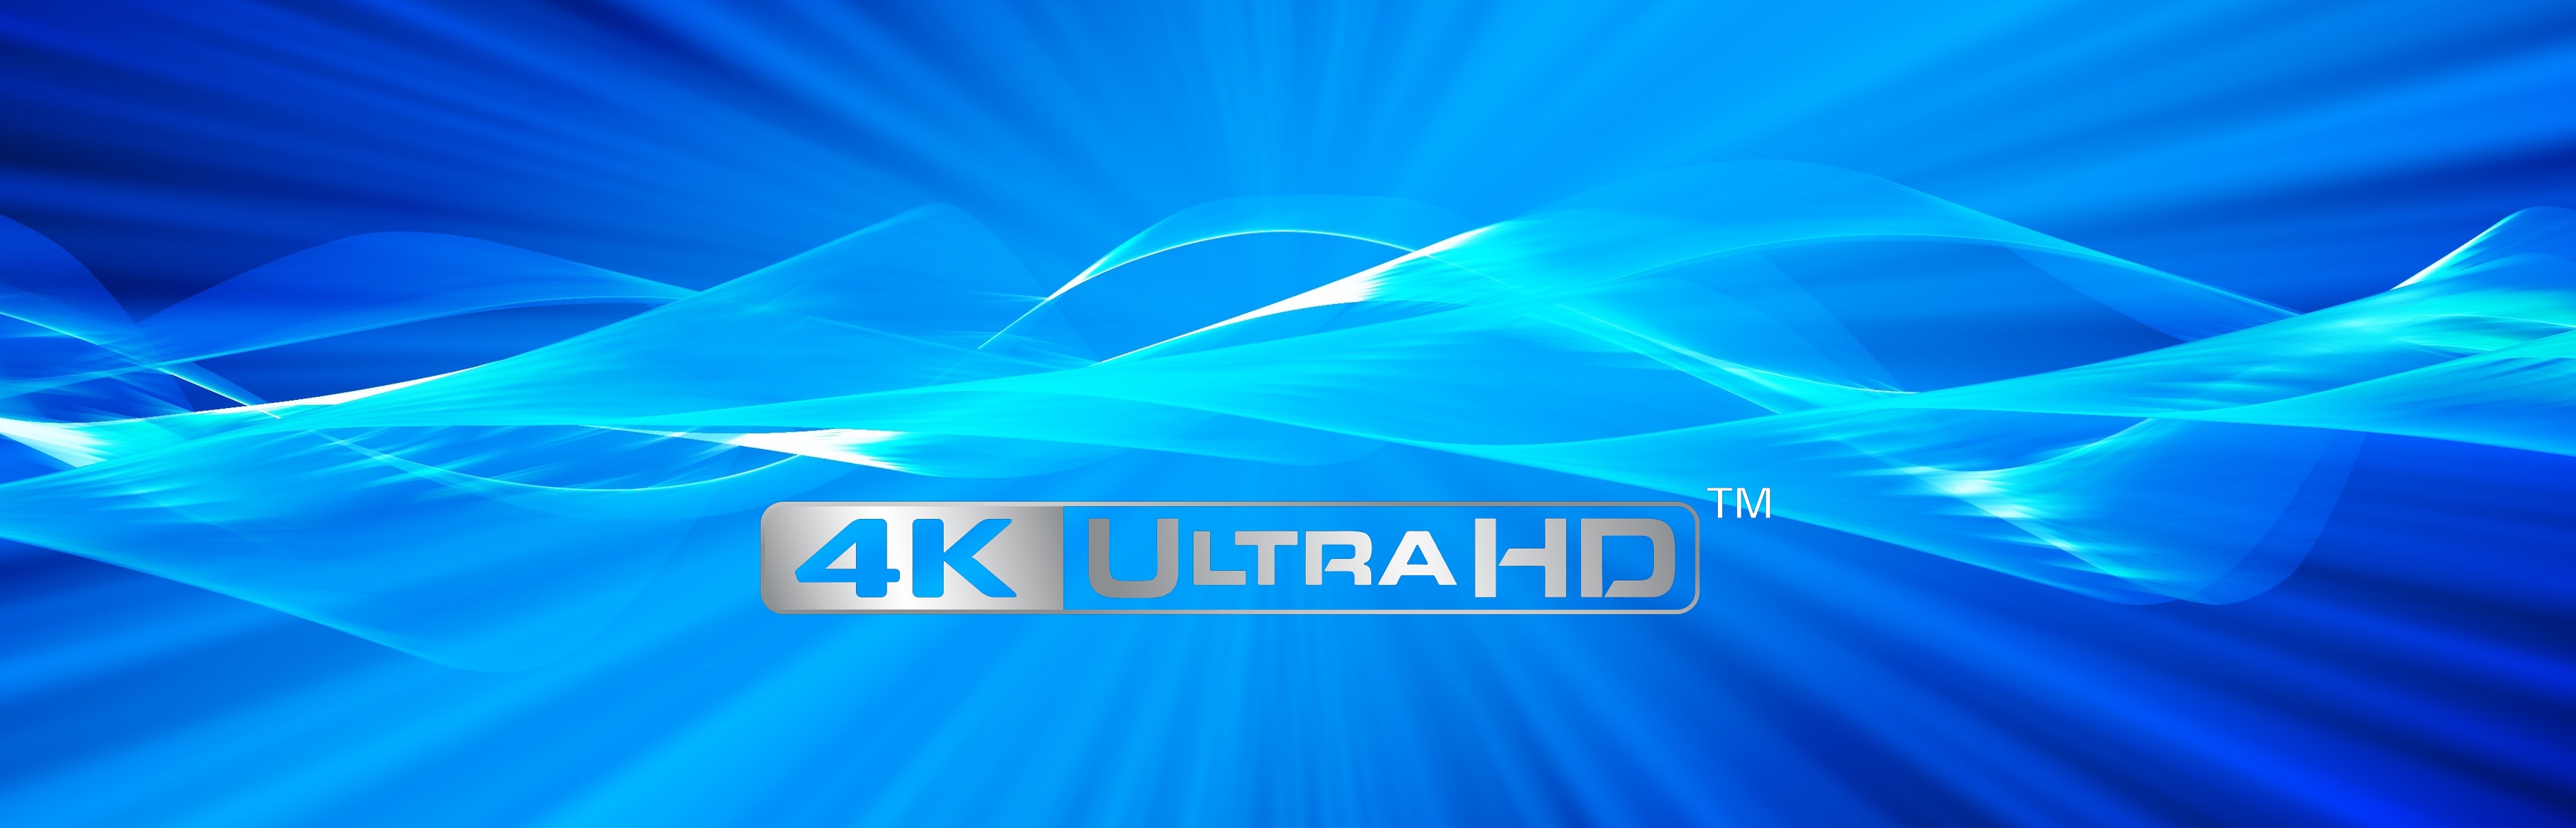 Blu-ray-ultra-hd-4k